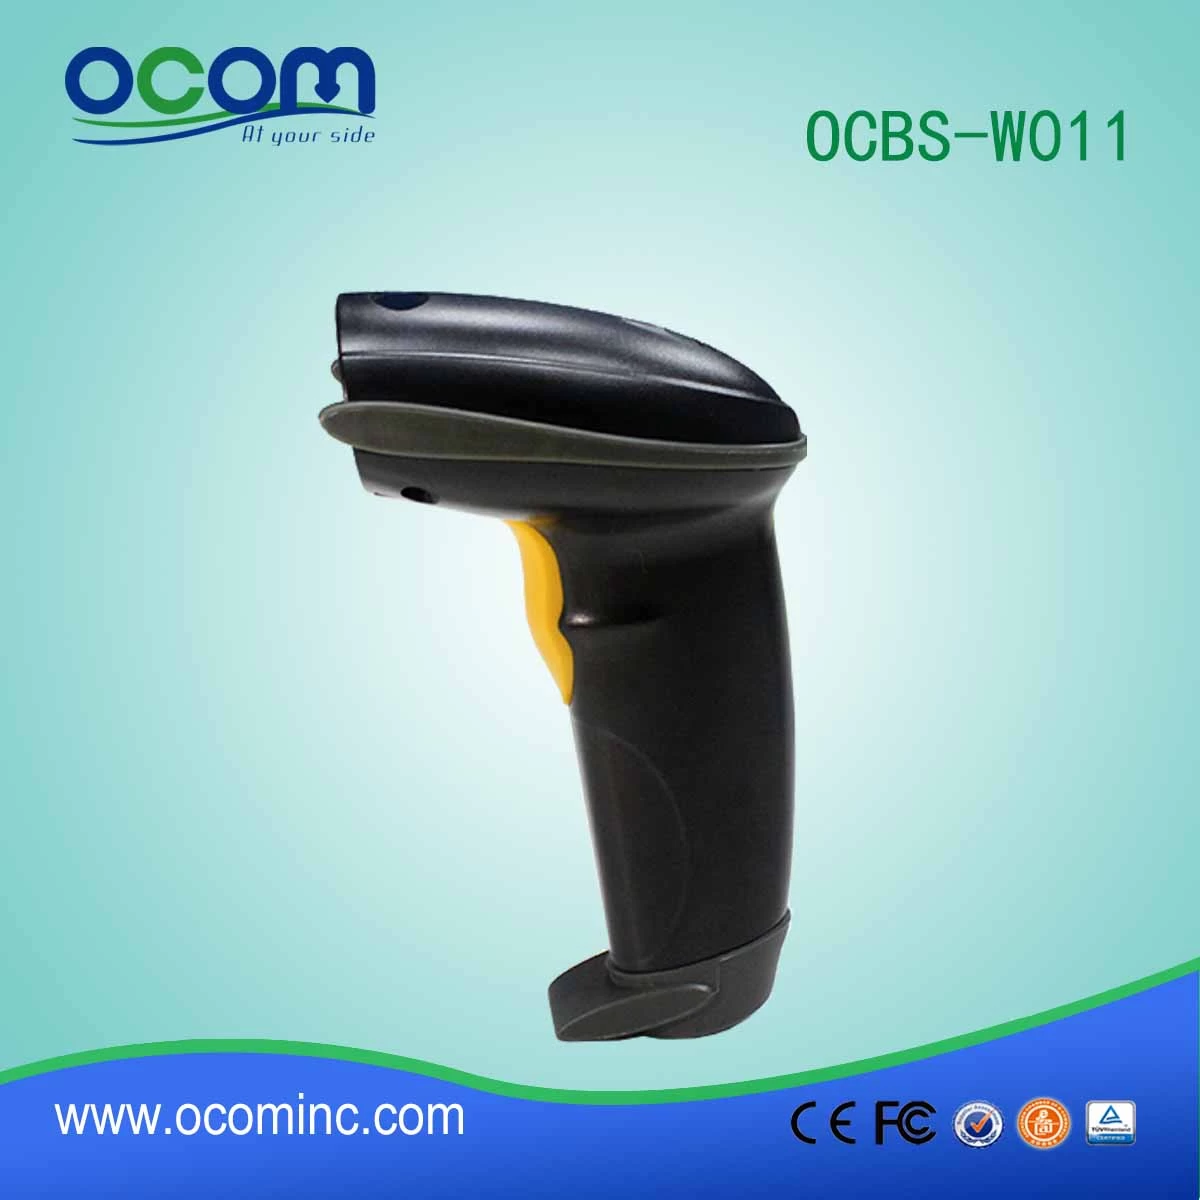 High scan rate usb RF433MHz Wireless Laser Barcode Scanner(OCBS-W011)